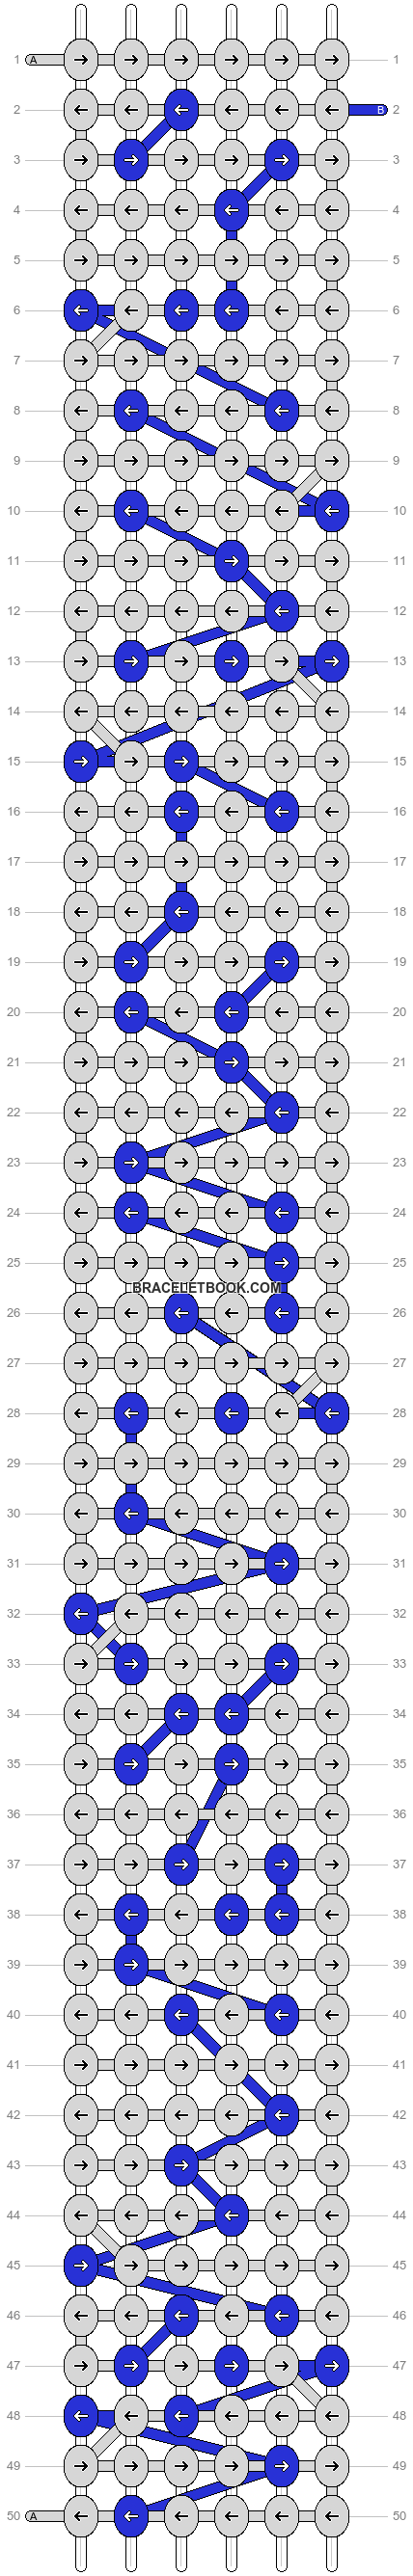 Alpha pattern #19579 pattern